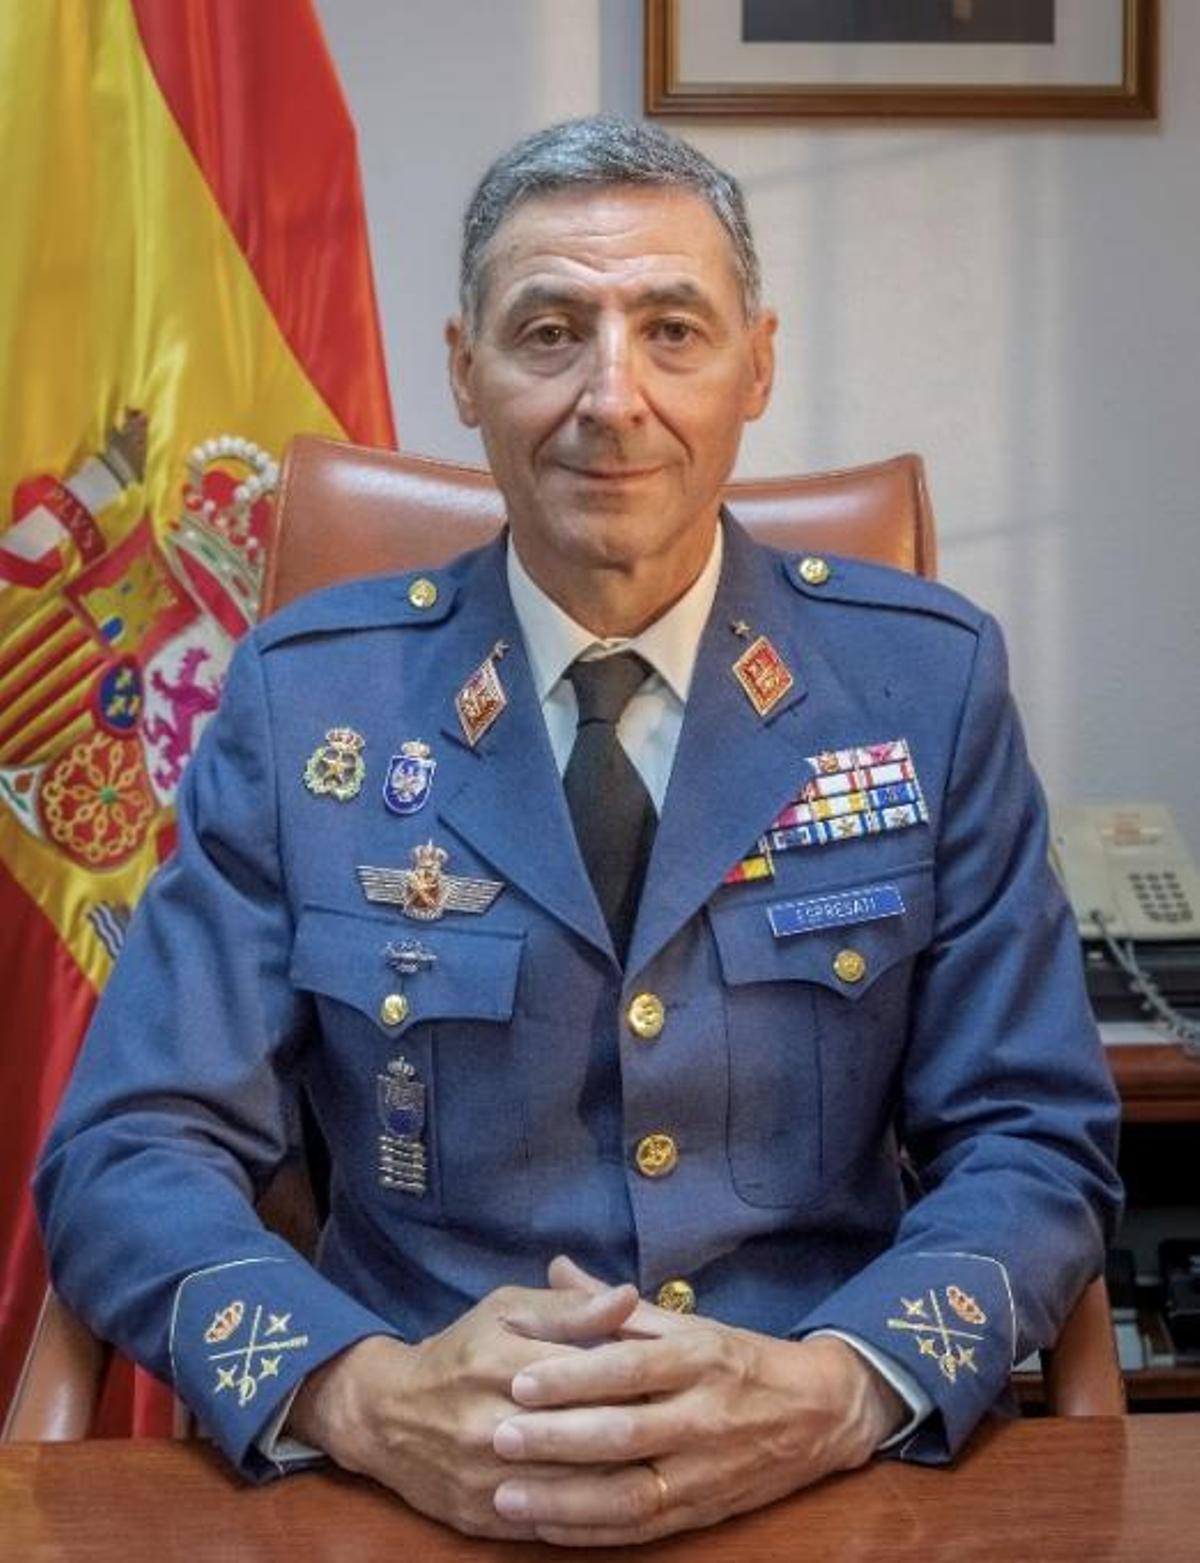 General Francisco González-Espresati